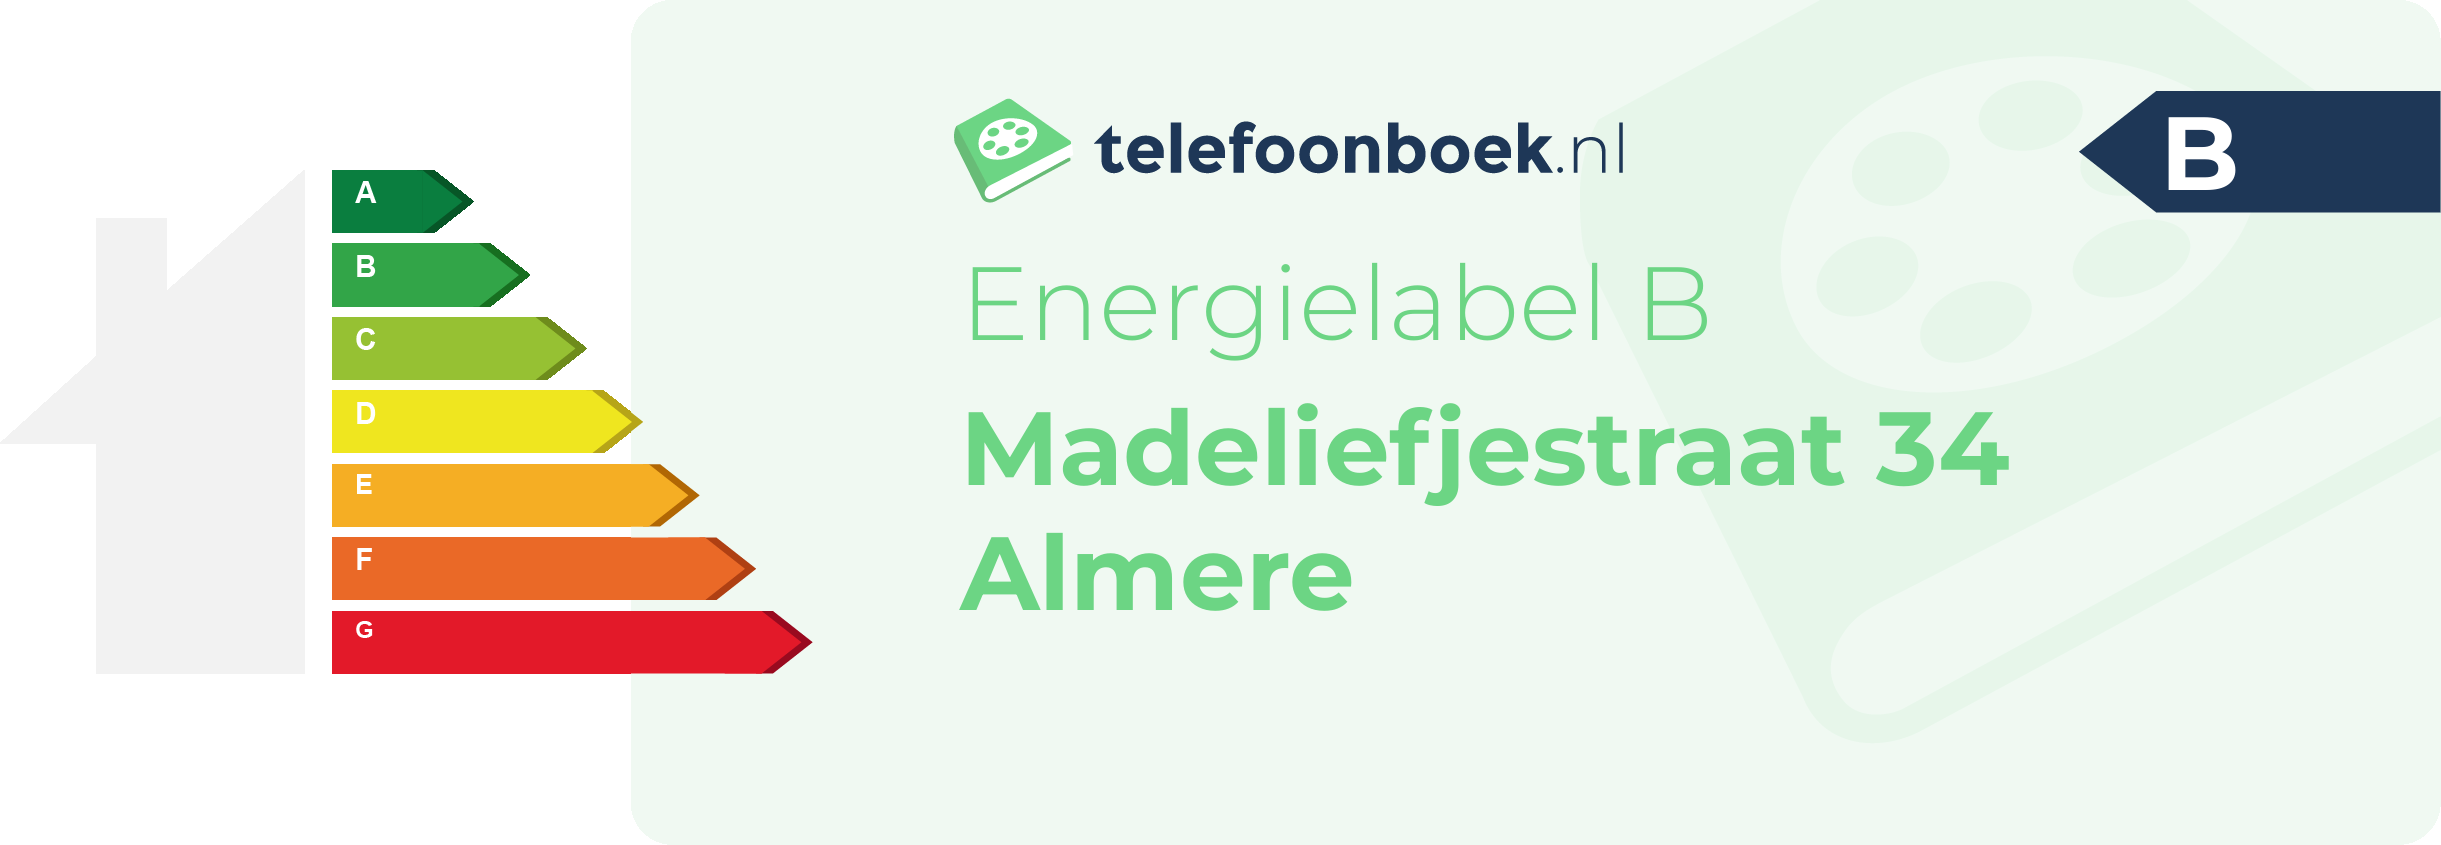 Energielabel Madeliefjestraat 34 Almere